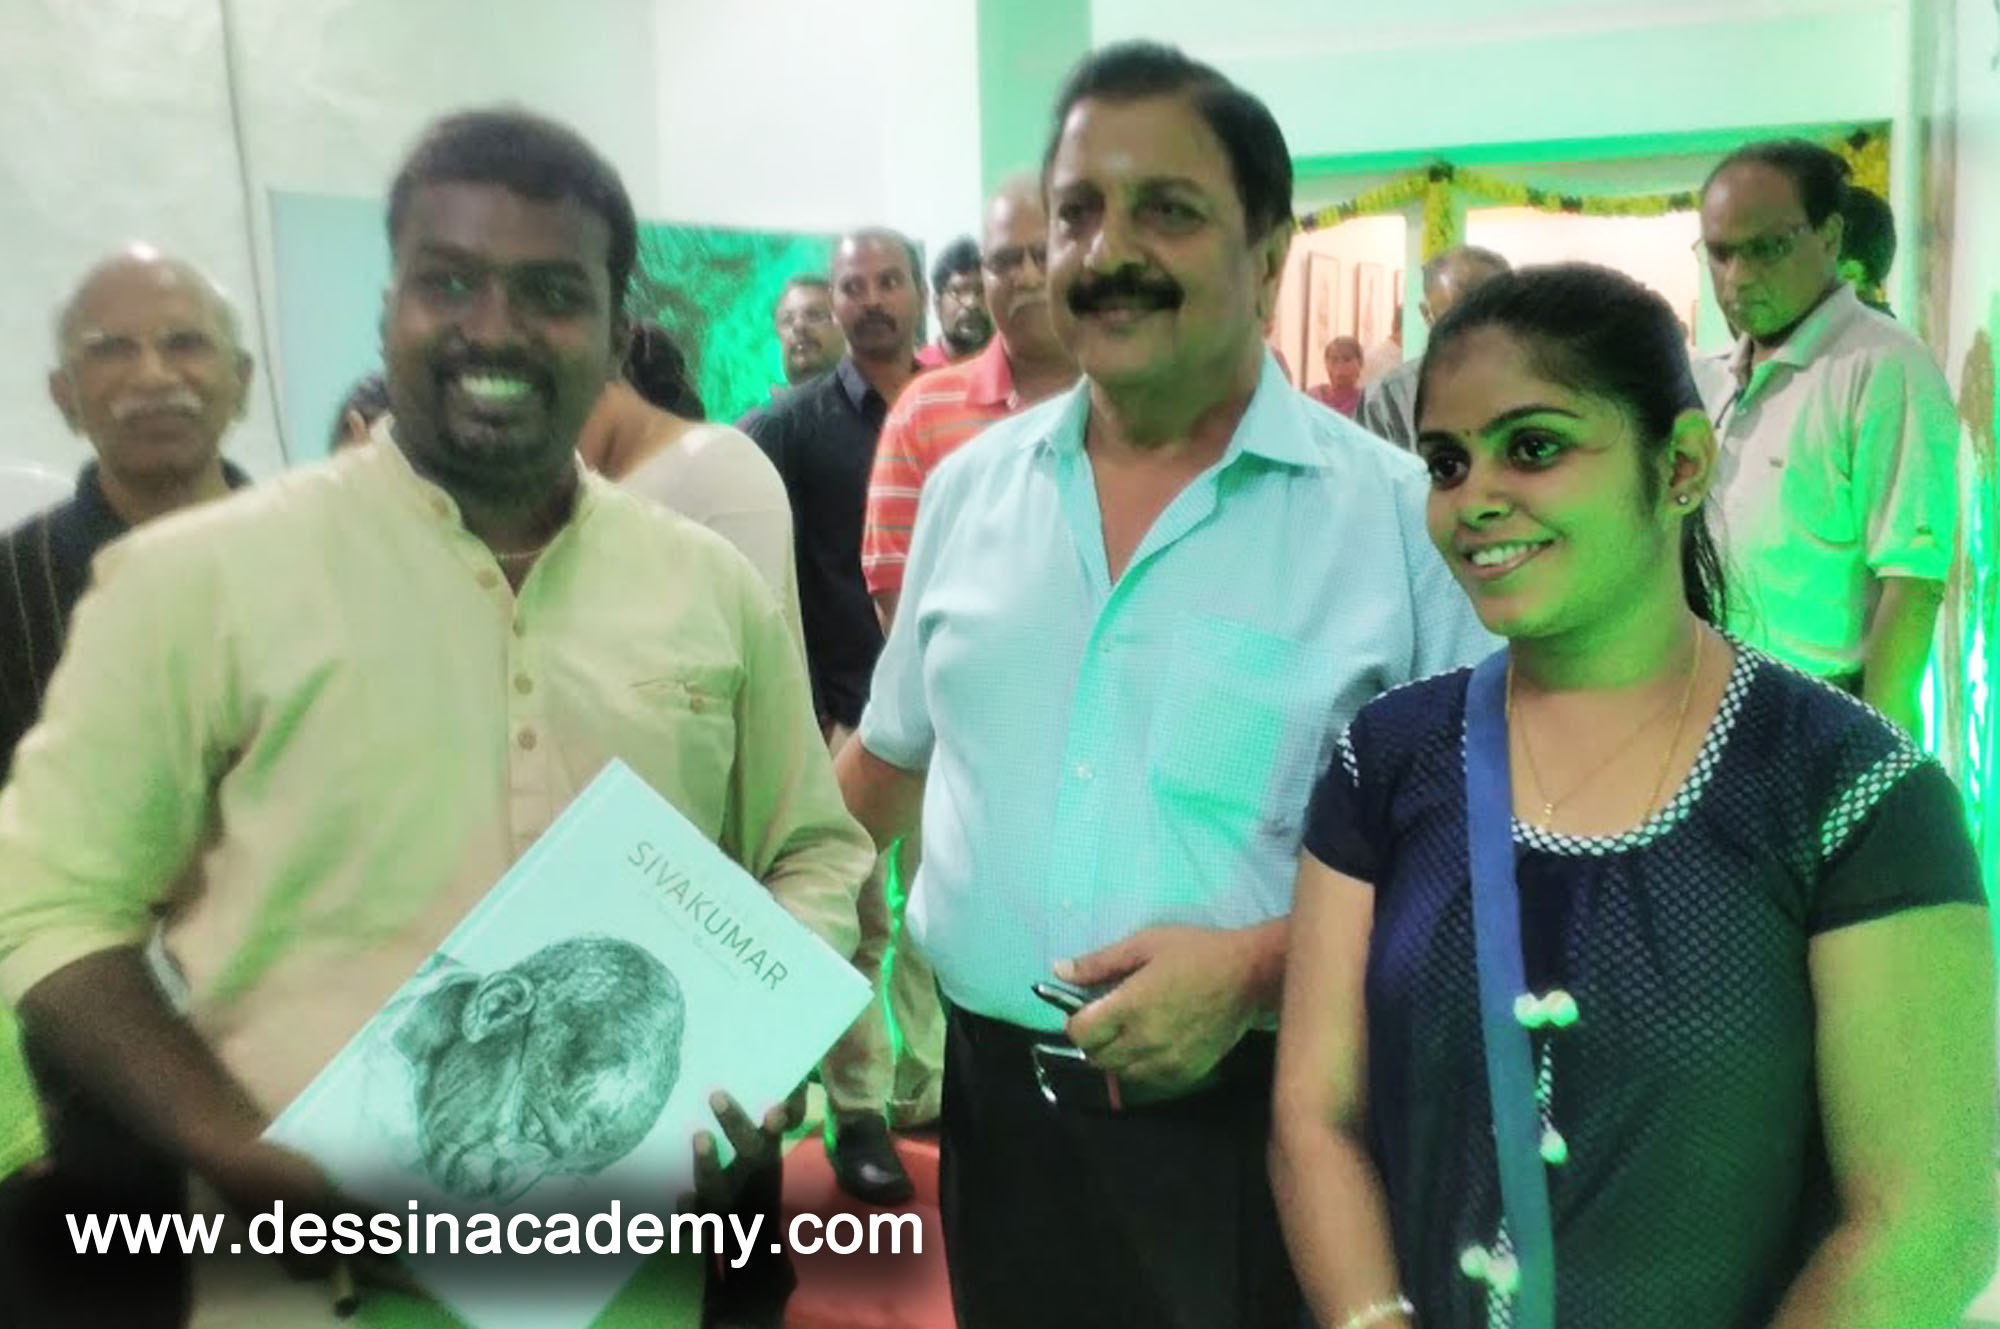 Dessin School of Arts Event Gallery 4, Drawing Institute in Coimbatore, , Saravanampatti, VilankurichiDessin School of Arts